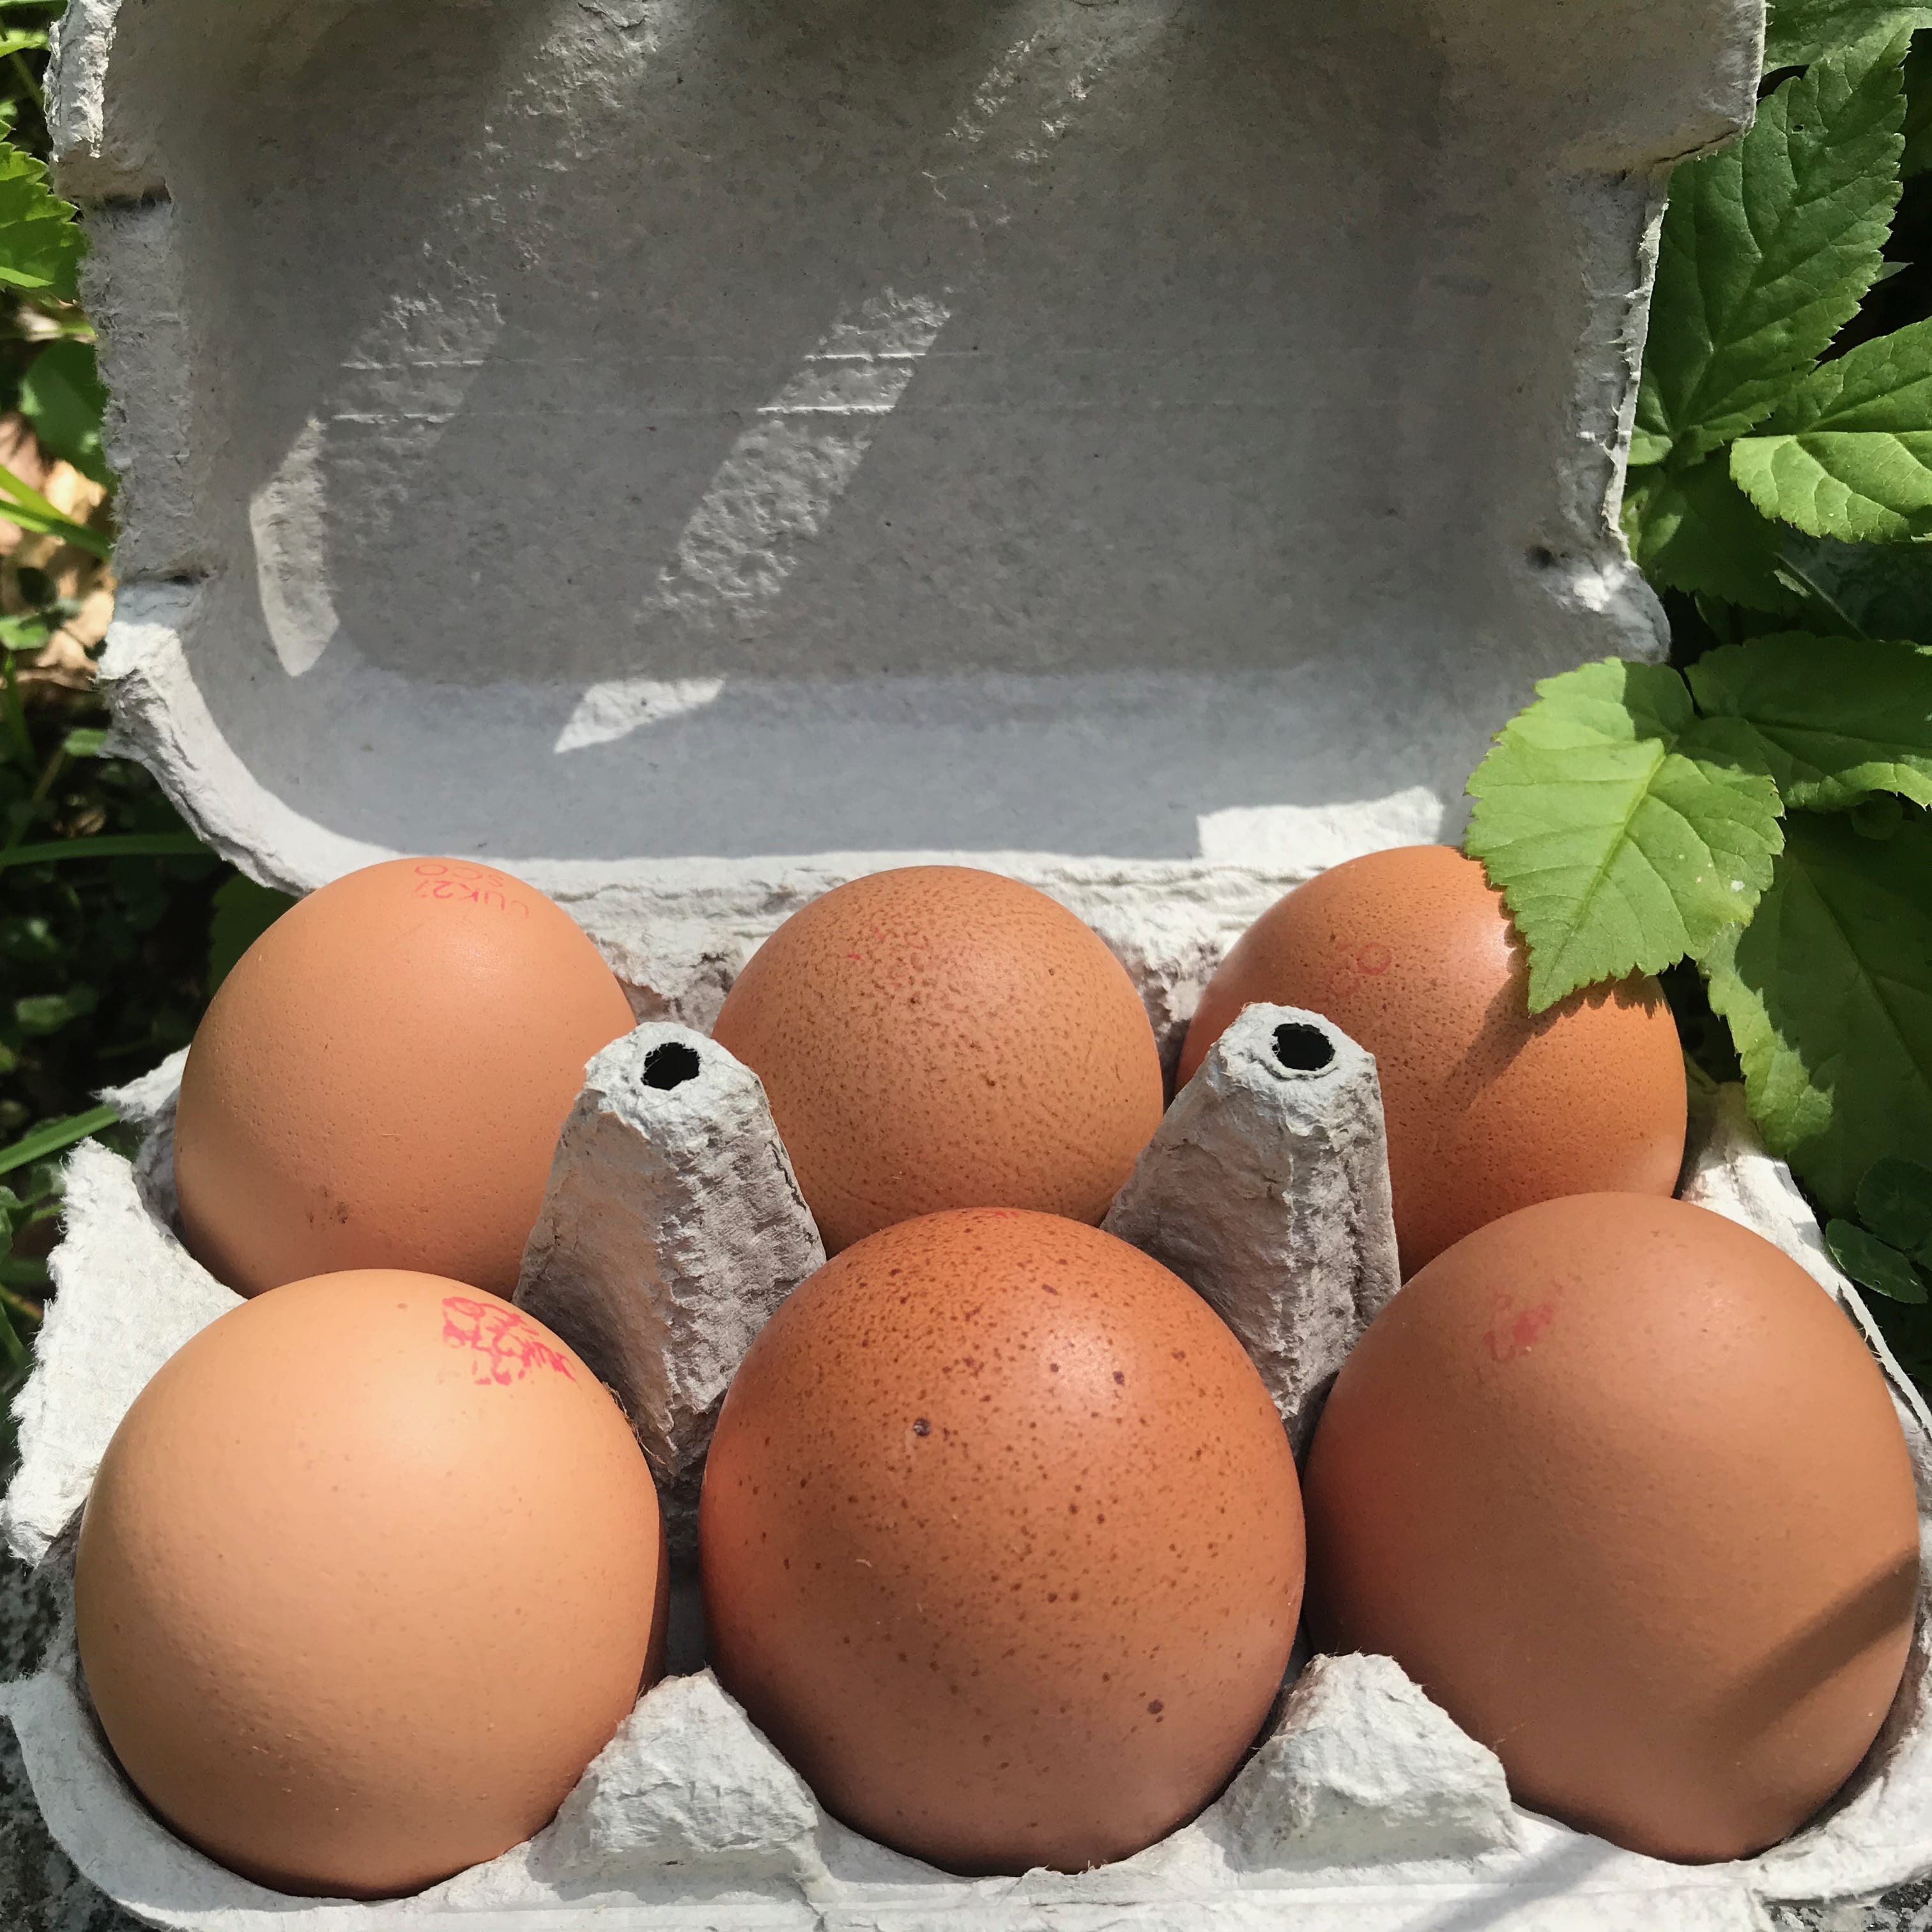 Eggs - Box of 6 organic Eggs